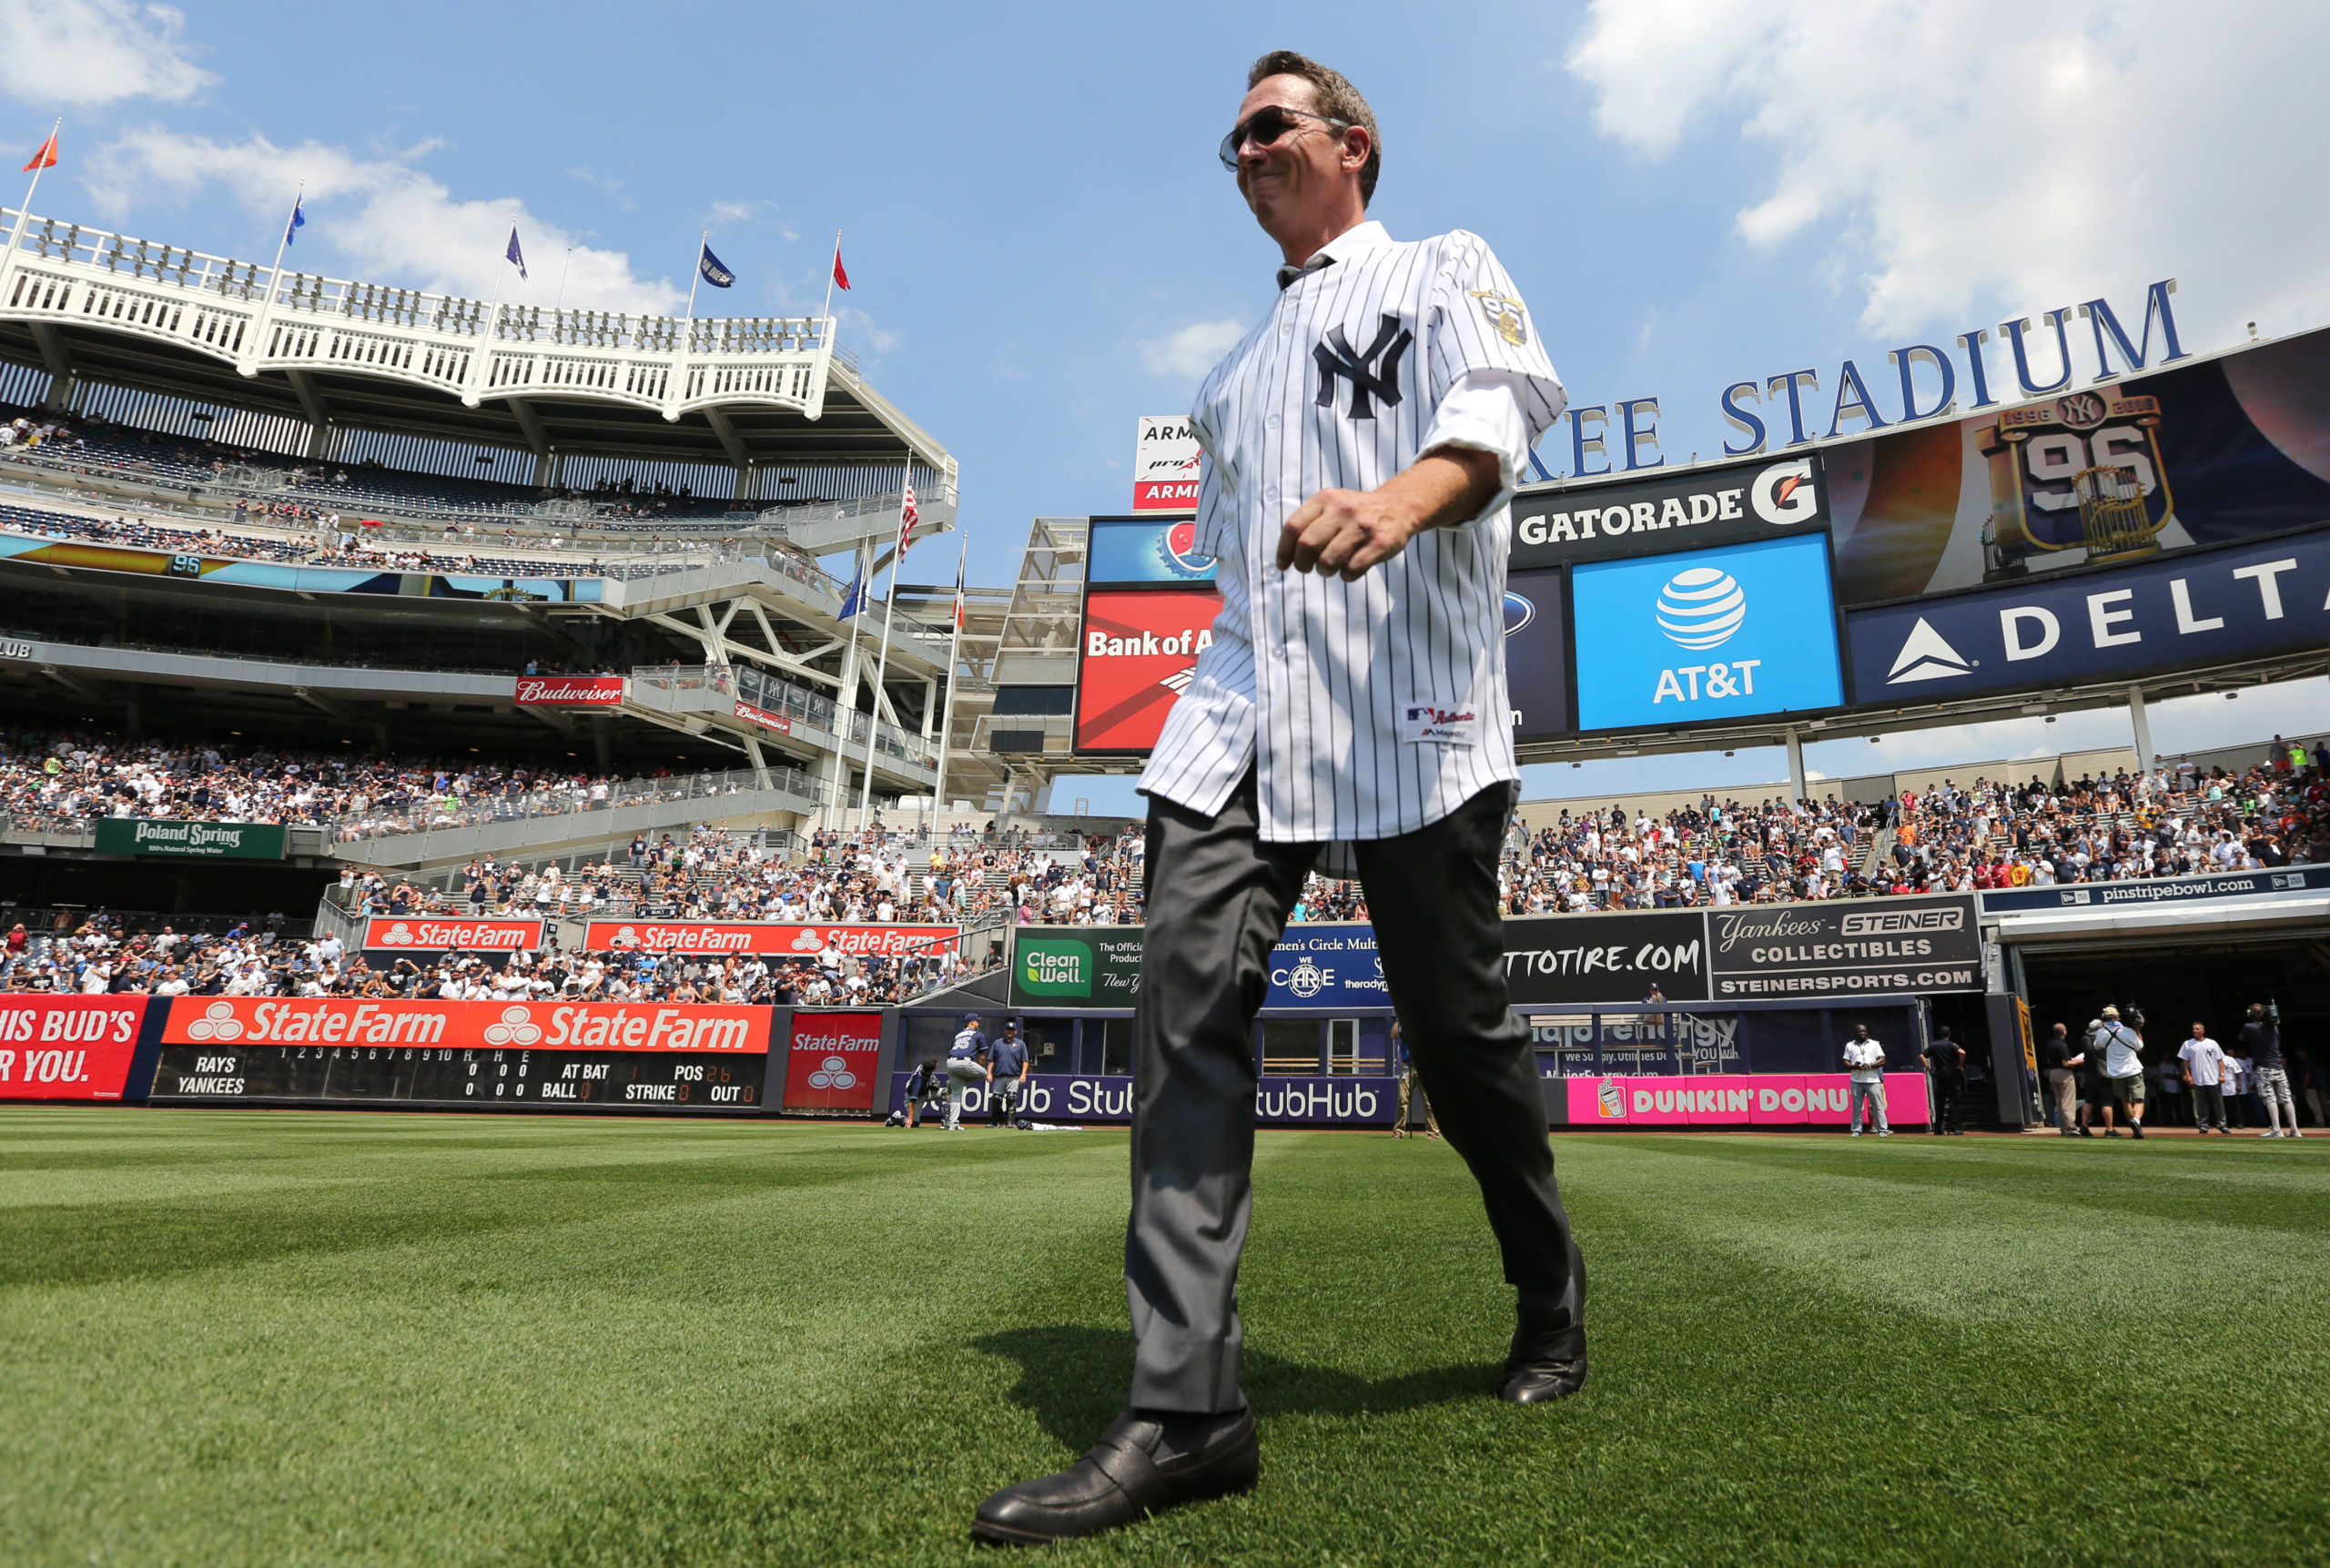 Derek Jeter New York Yankees 5X World Series Champion Spinning